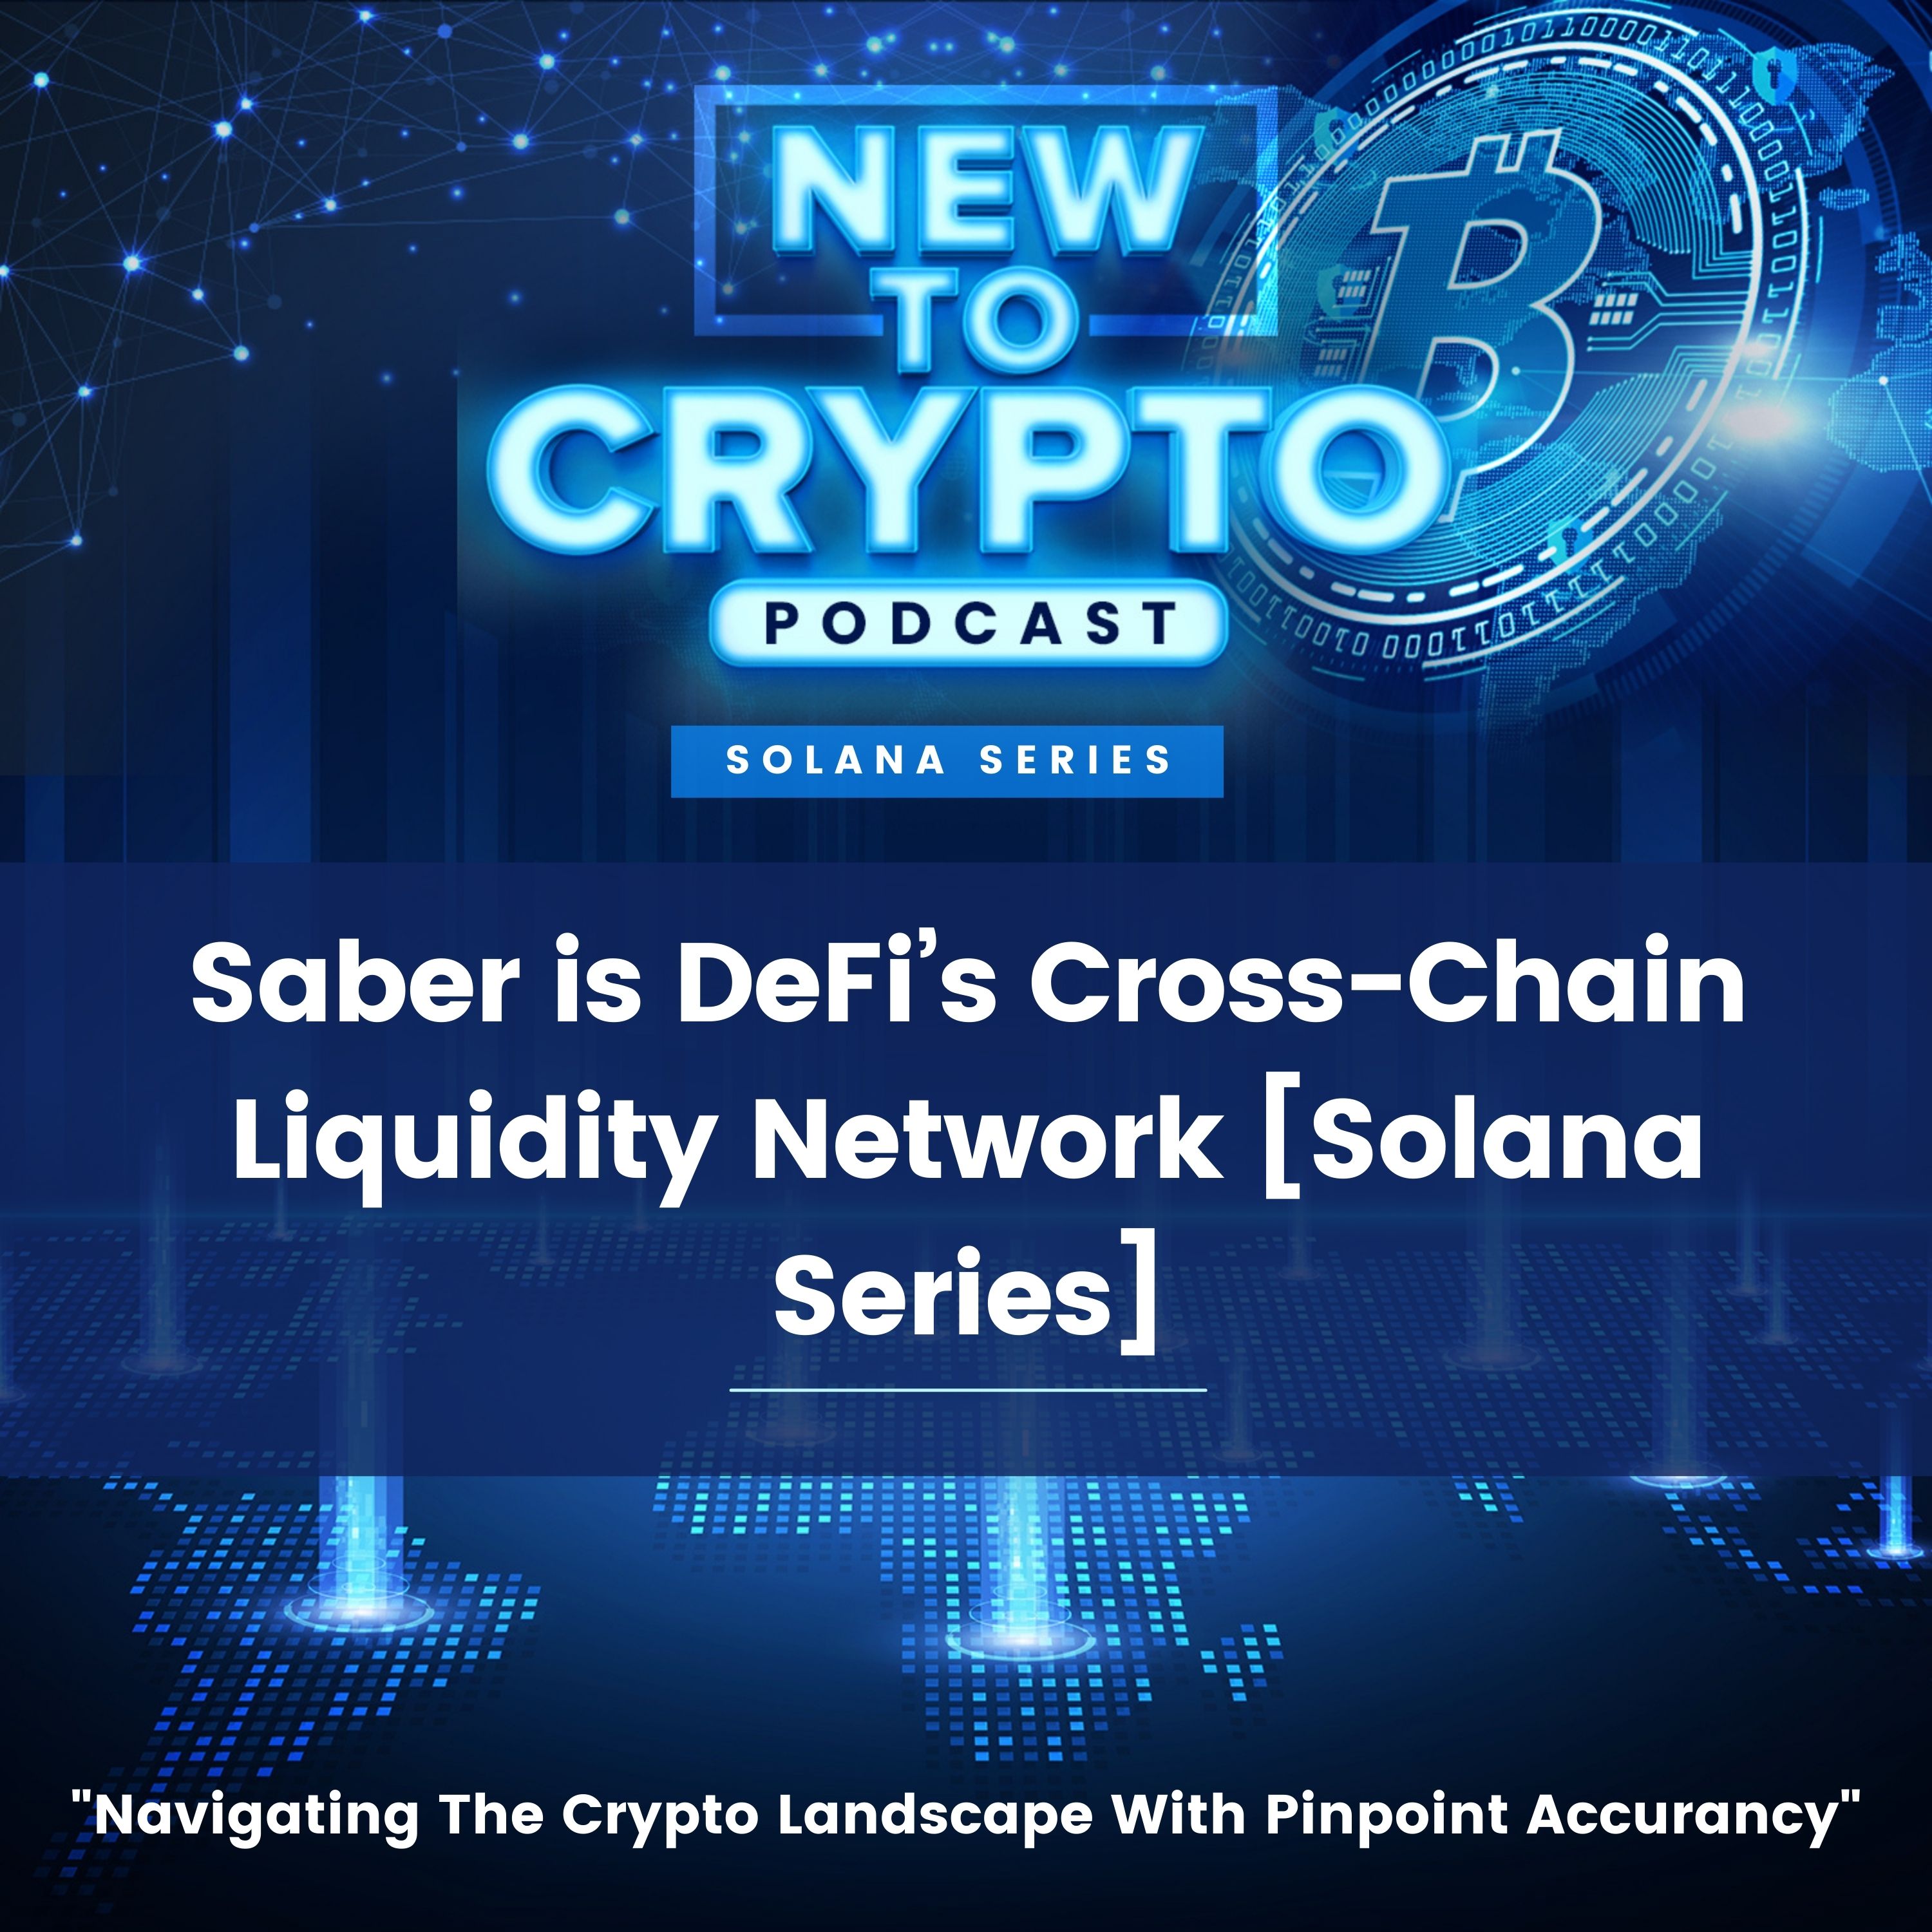 Saber is DeFi’s Cross-Chain Liquidity Network [Solana Series]